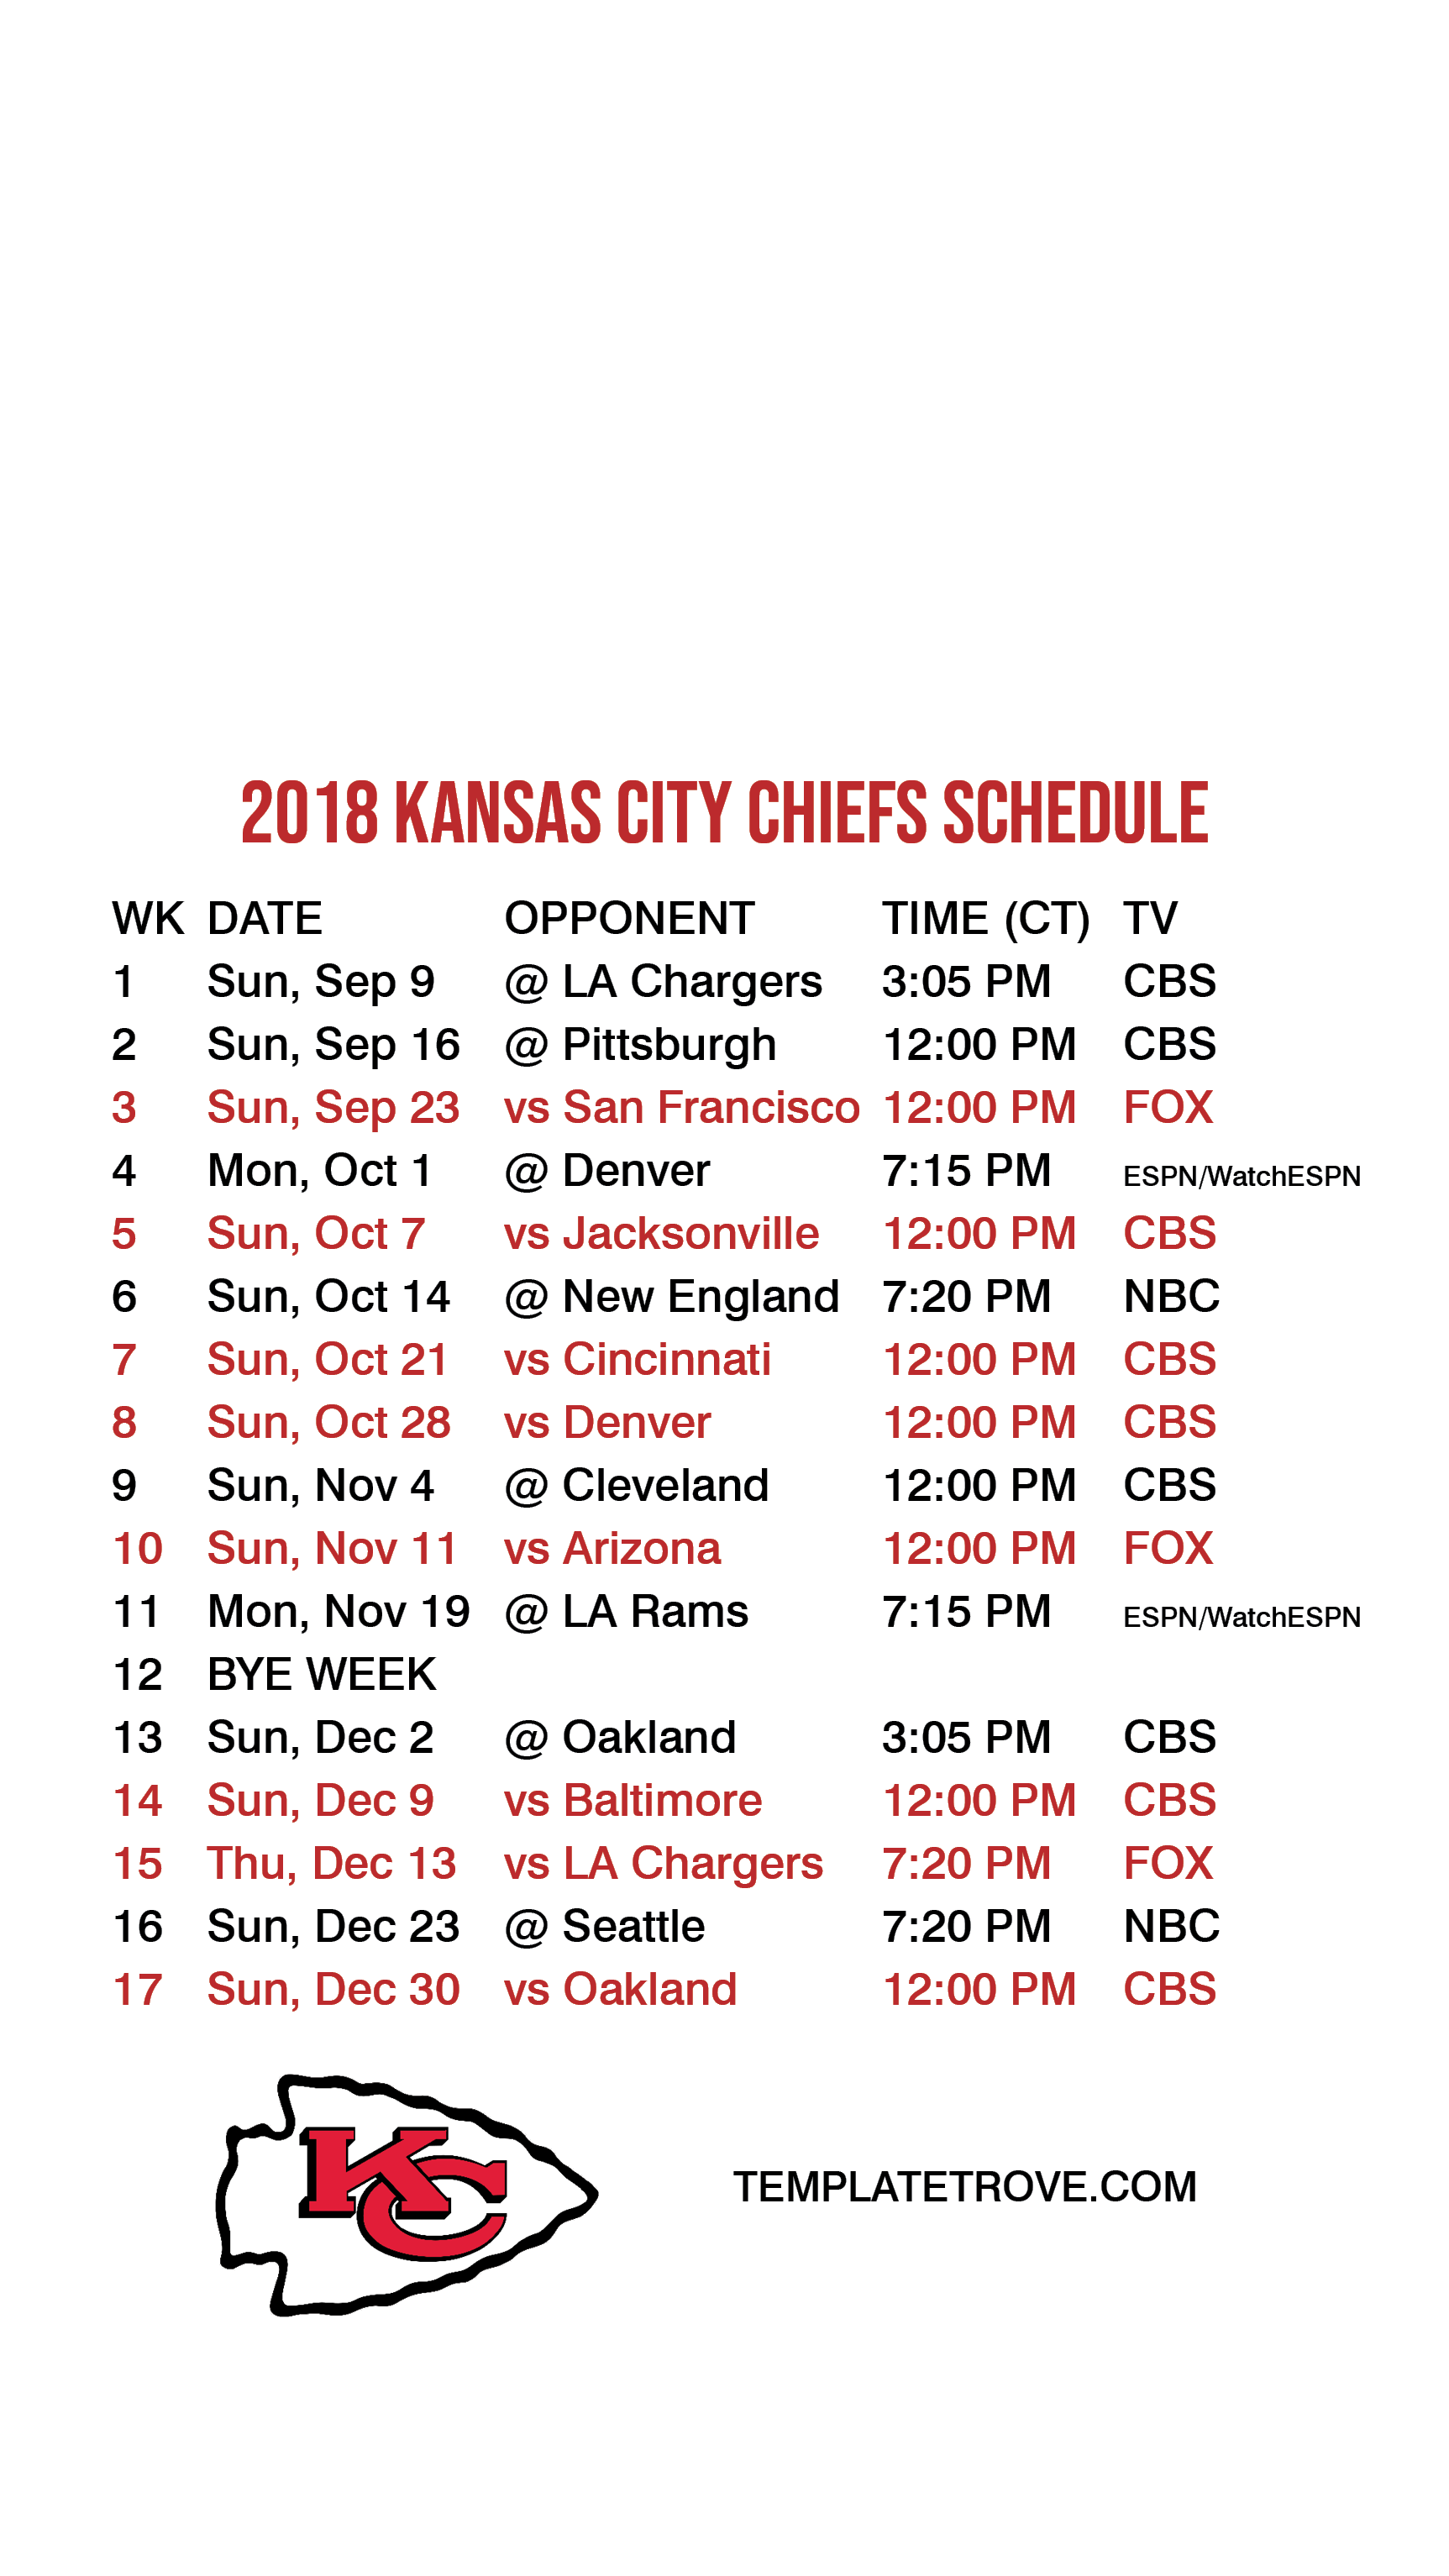 2018 2019 Kansas City Chiefs Lock Screen Schedule for iPhone 6 7 8 Plus